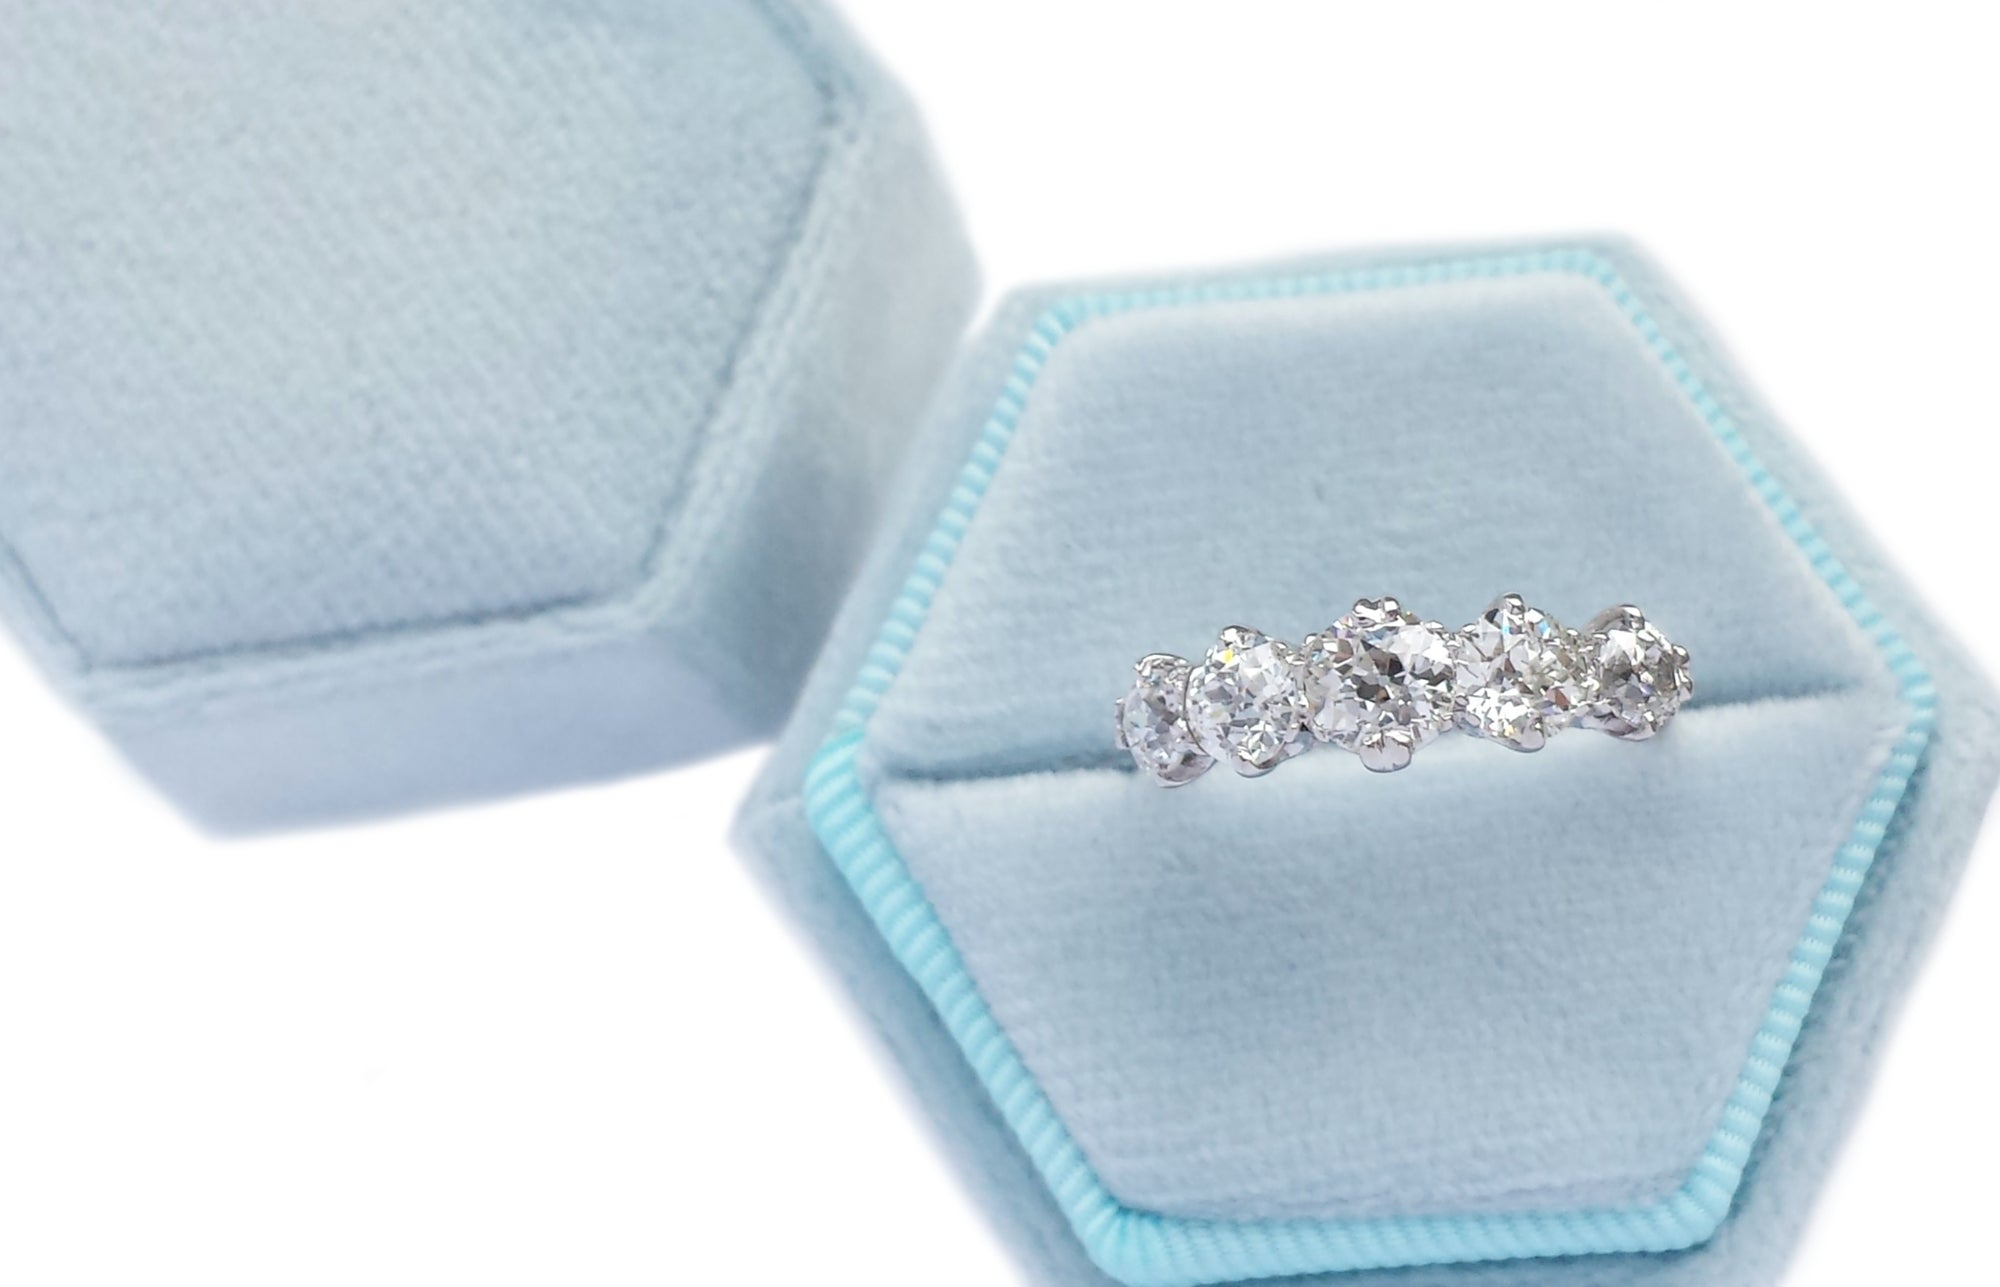 Vintage 1.65ct 5-Stone Old European Cut Diamond Engagement Ring in Platinum